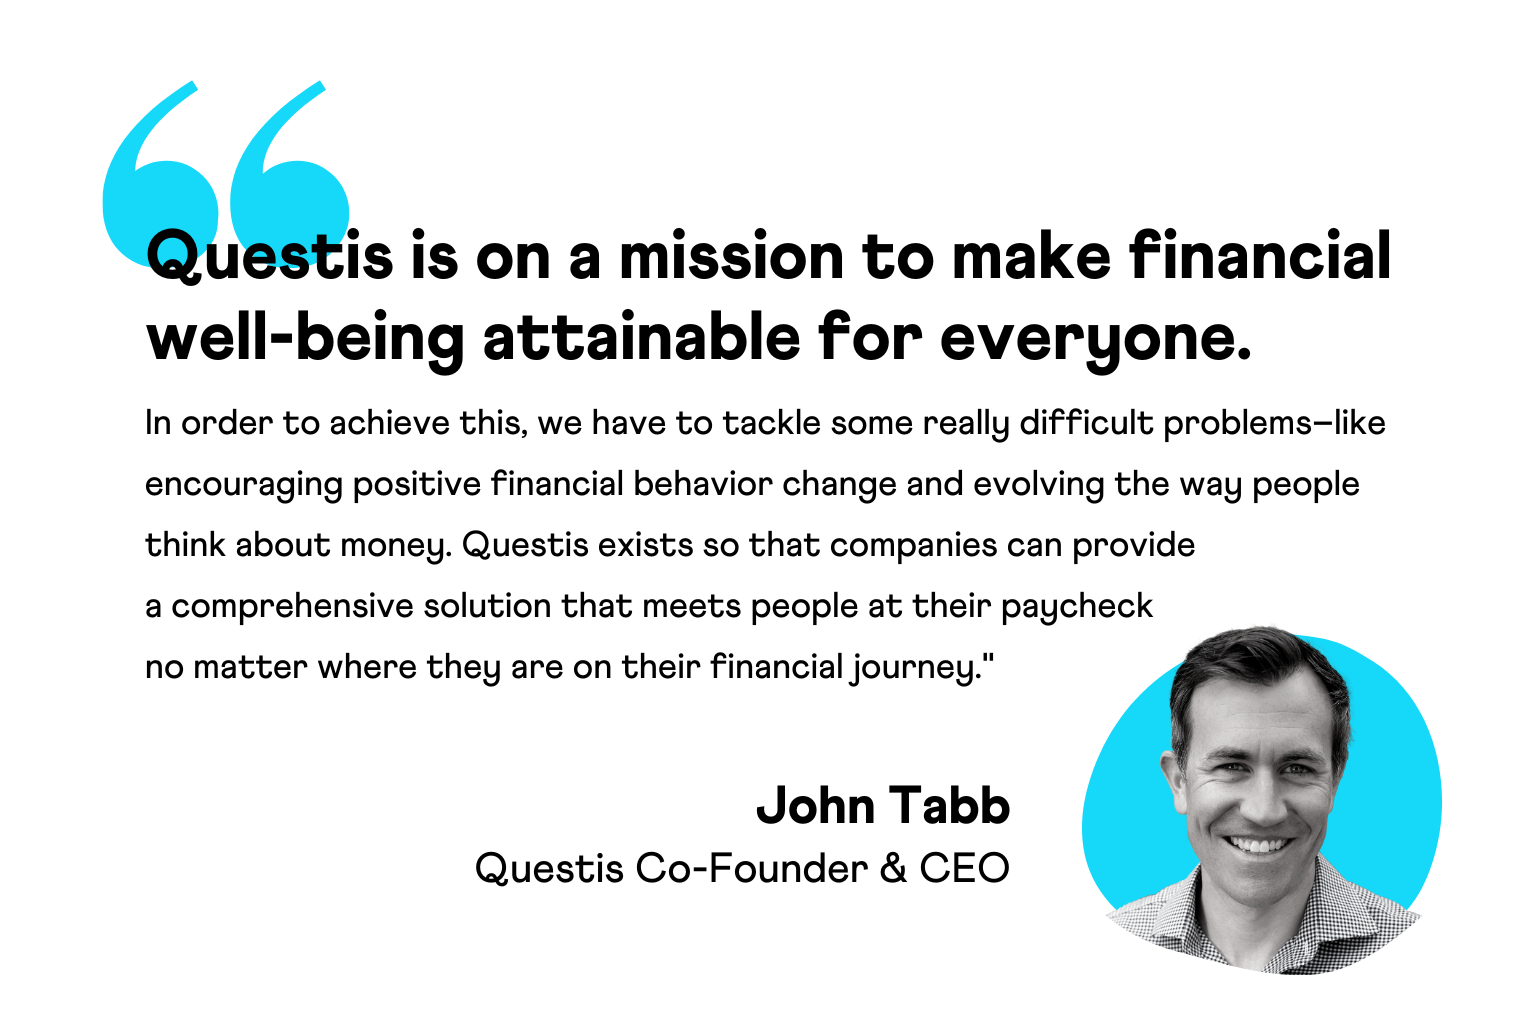 John Tabb - Questis Co-Founder & CEO